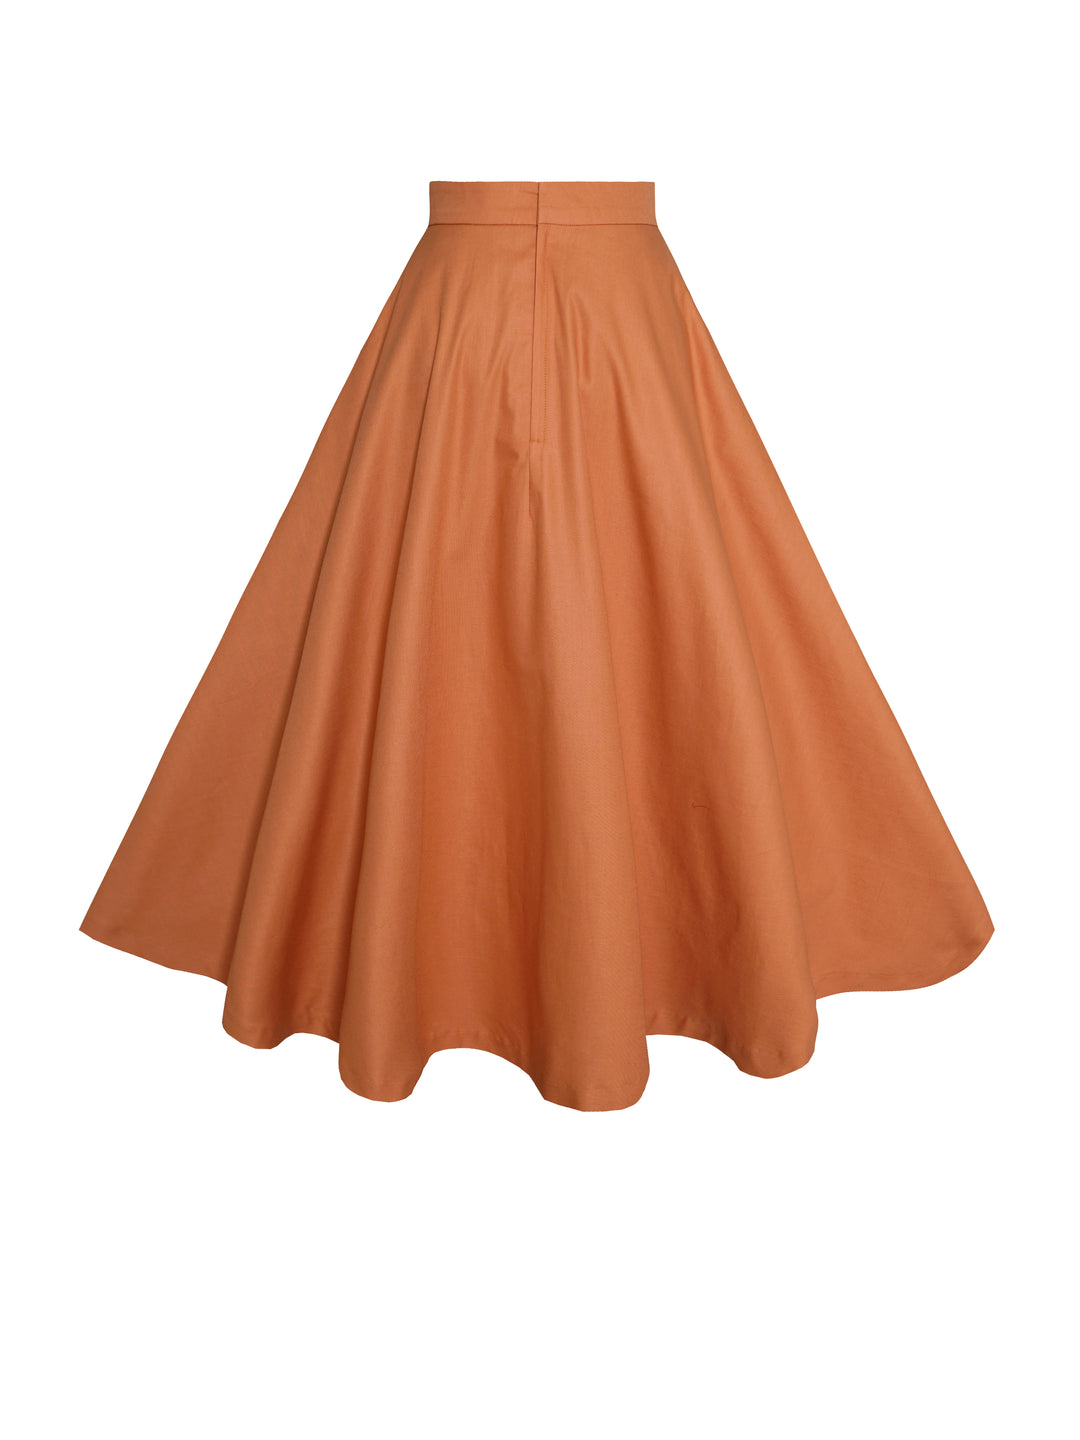 MTO - Lilian Skirt in Burnt Orange Cotton